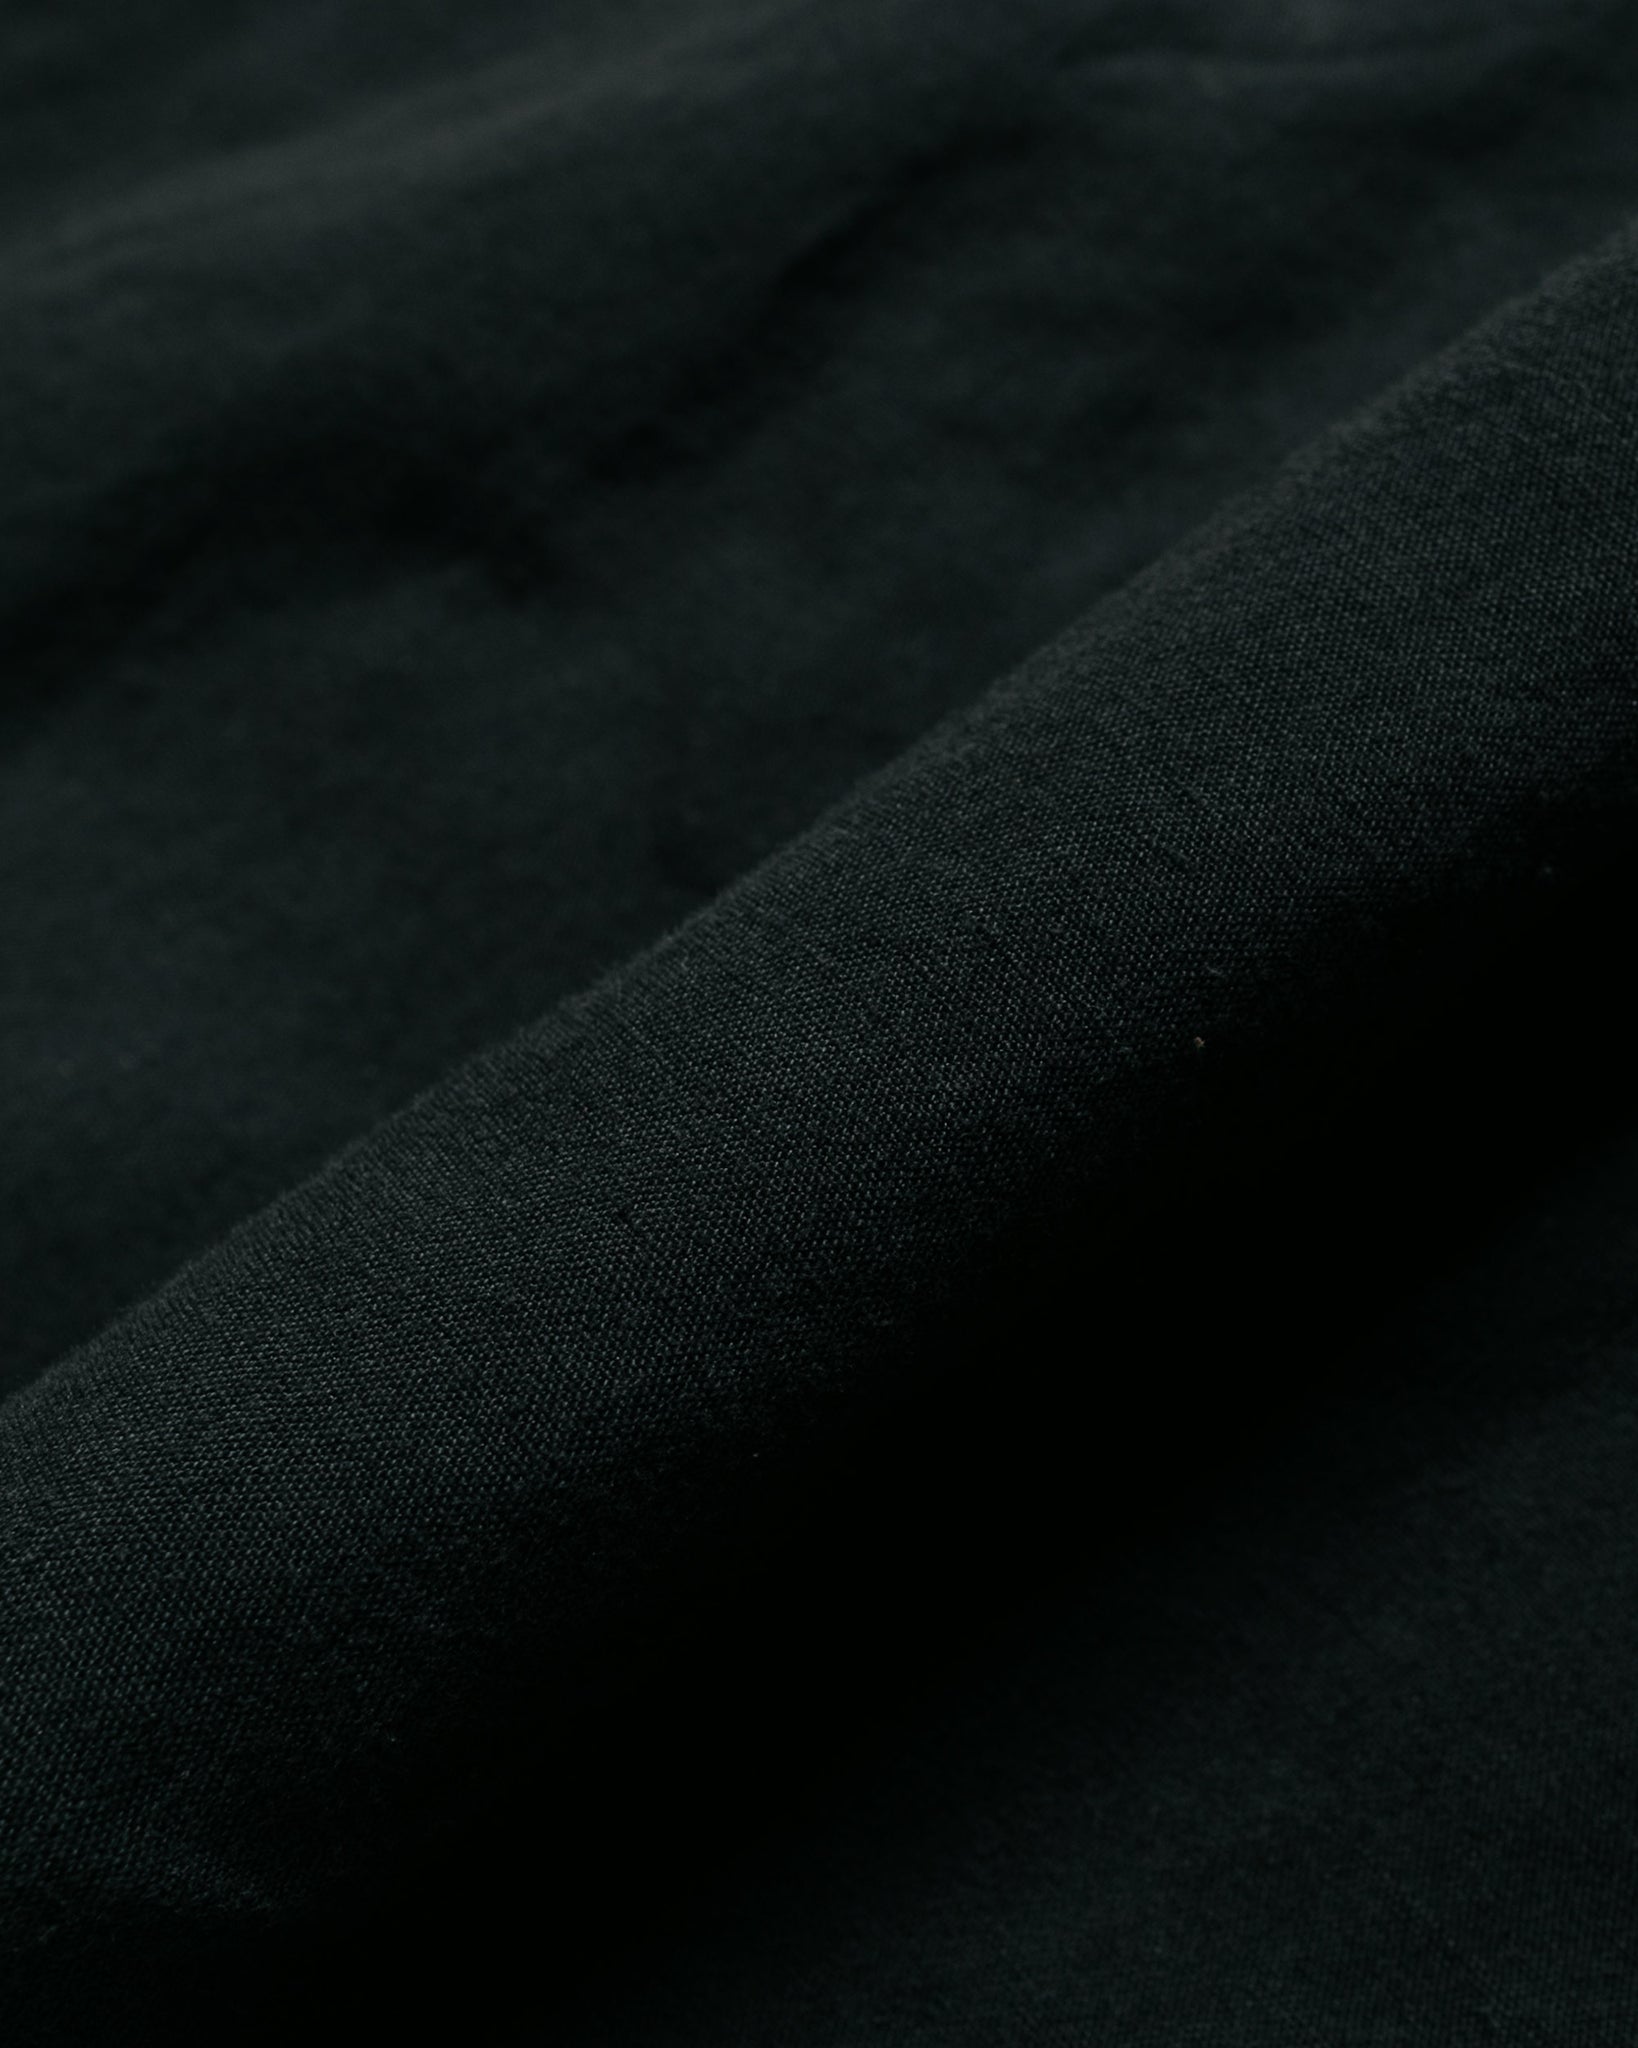 The Real McCoy's MS24002 Junk Force Black Pajama Shirt Black fabric